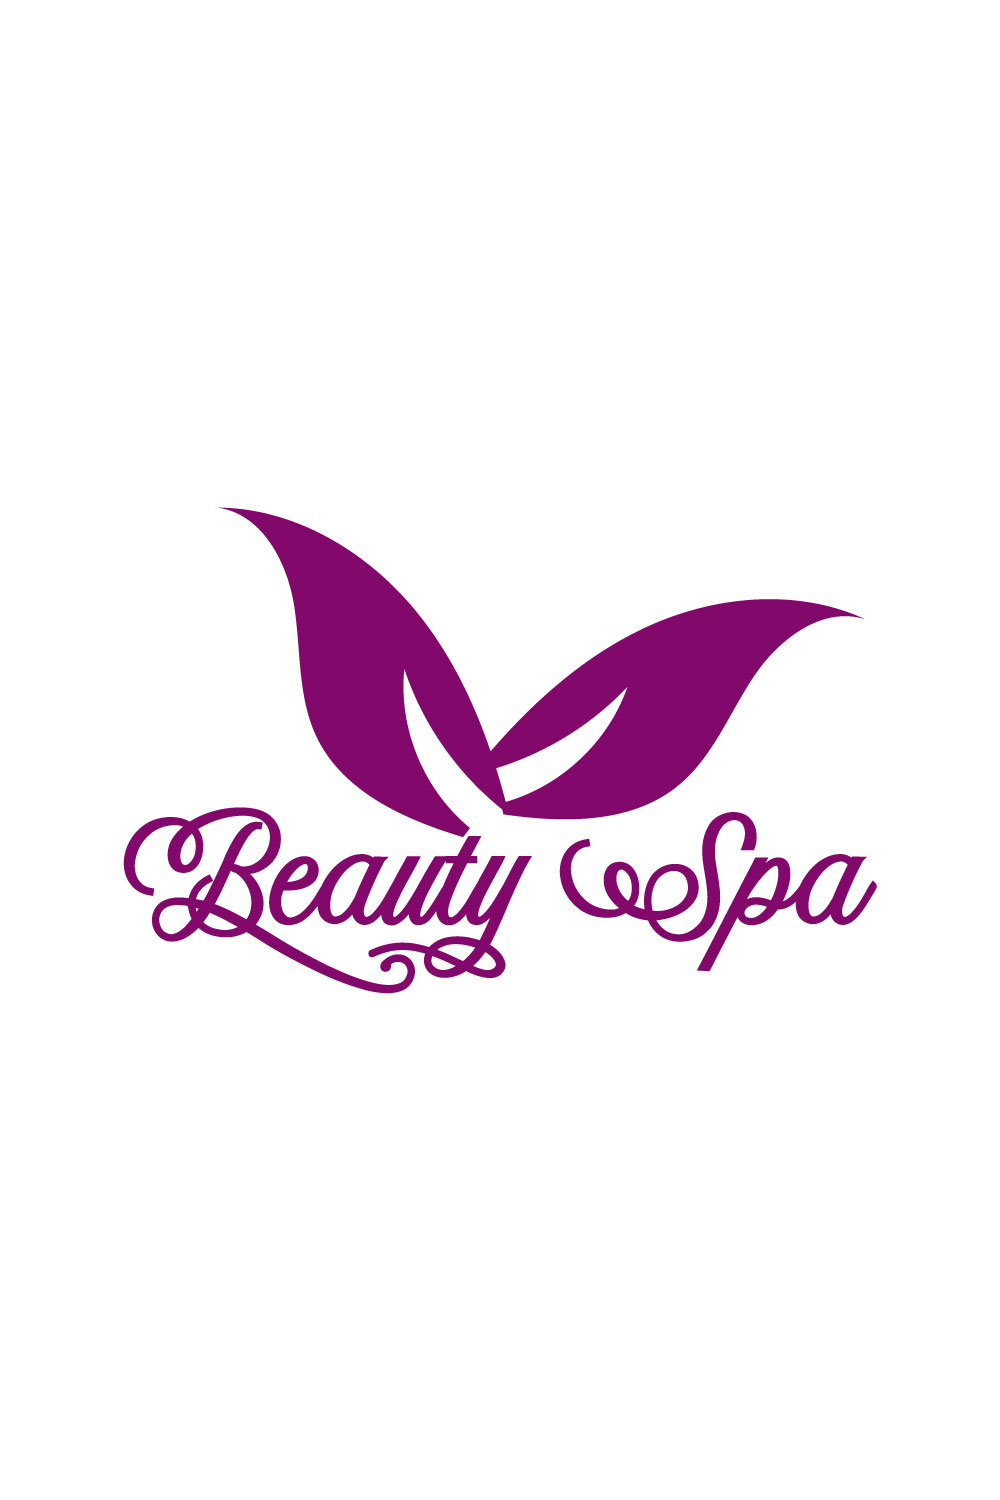 Free Spa Beauty logo pinterest preview image.